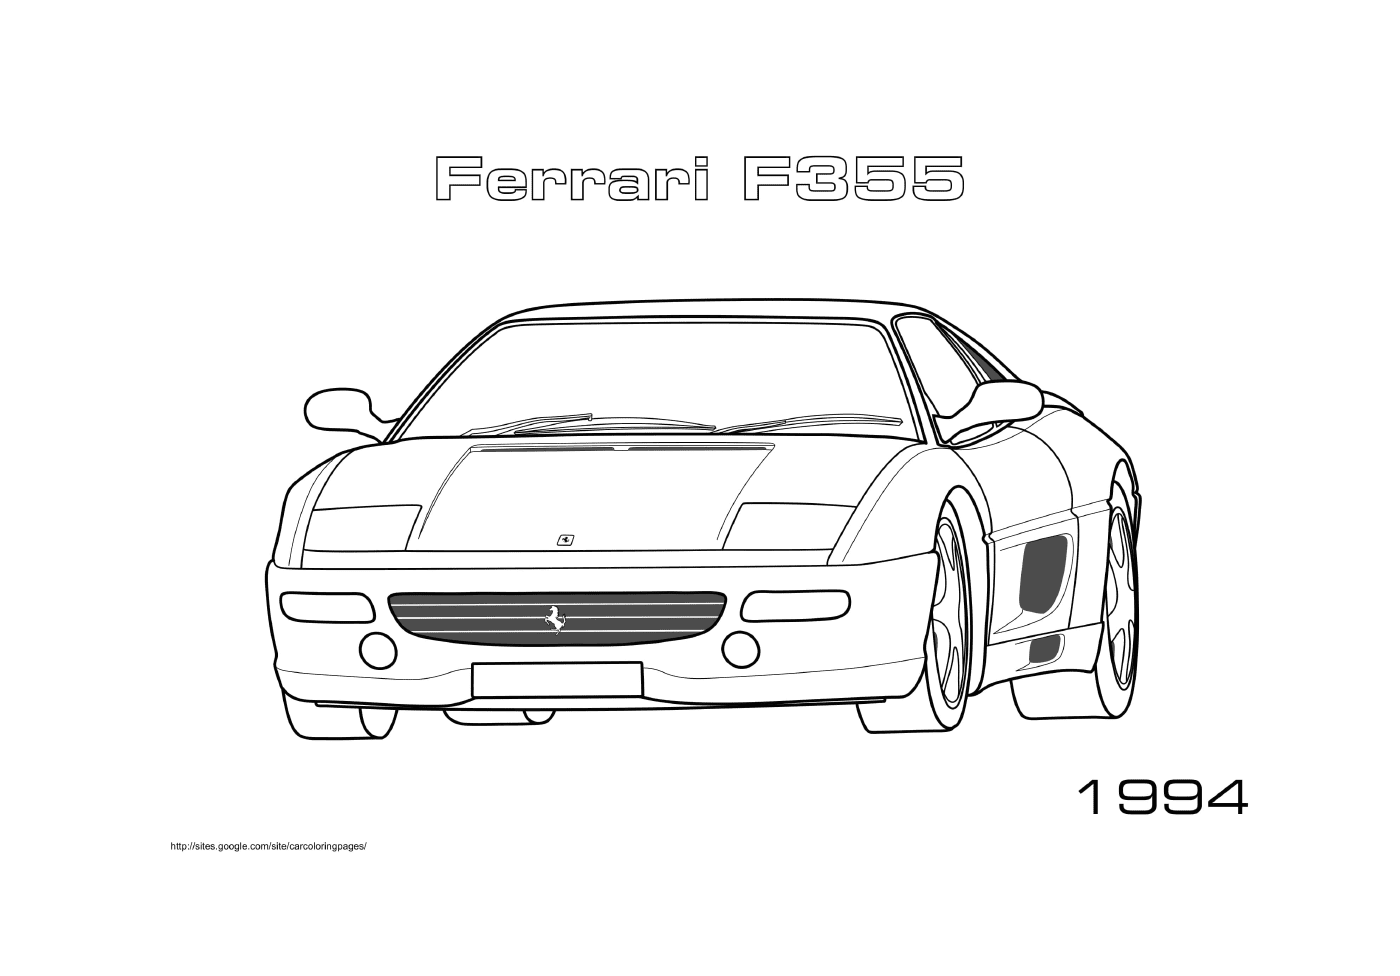  Una Ferrari F355 1994 